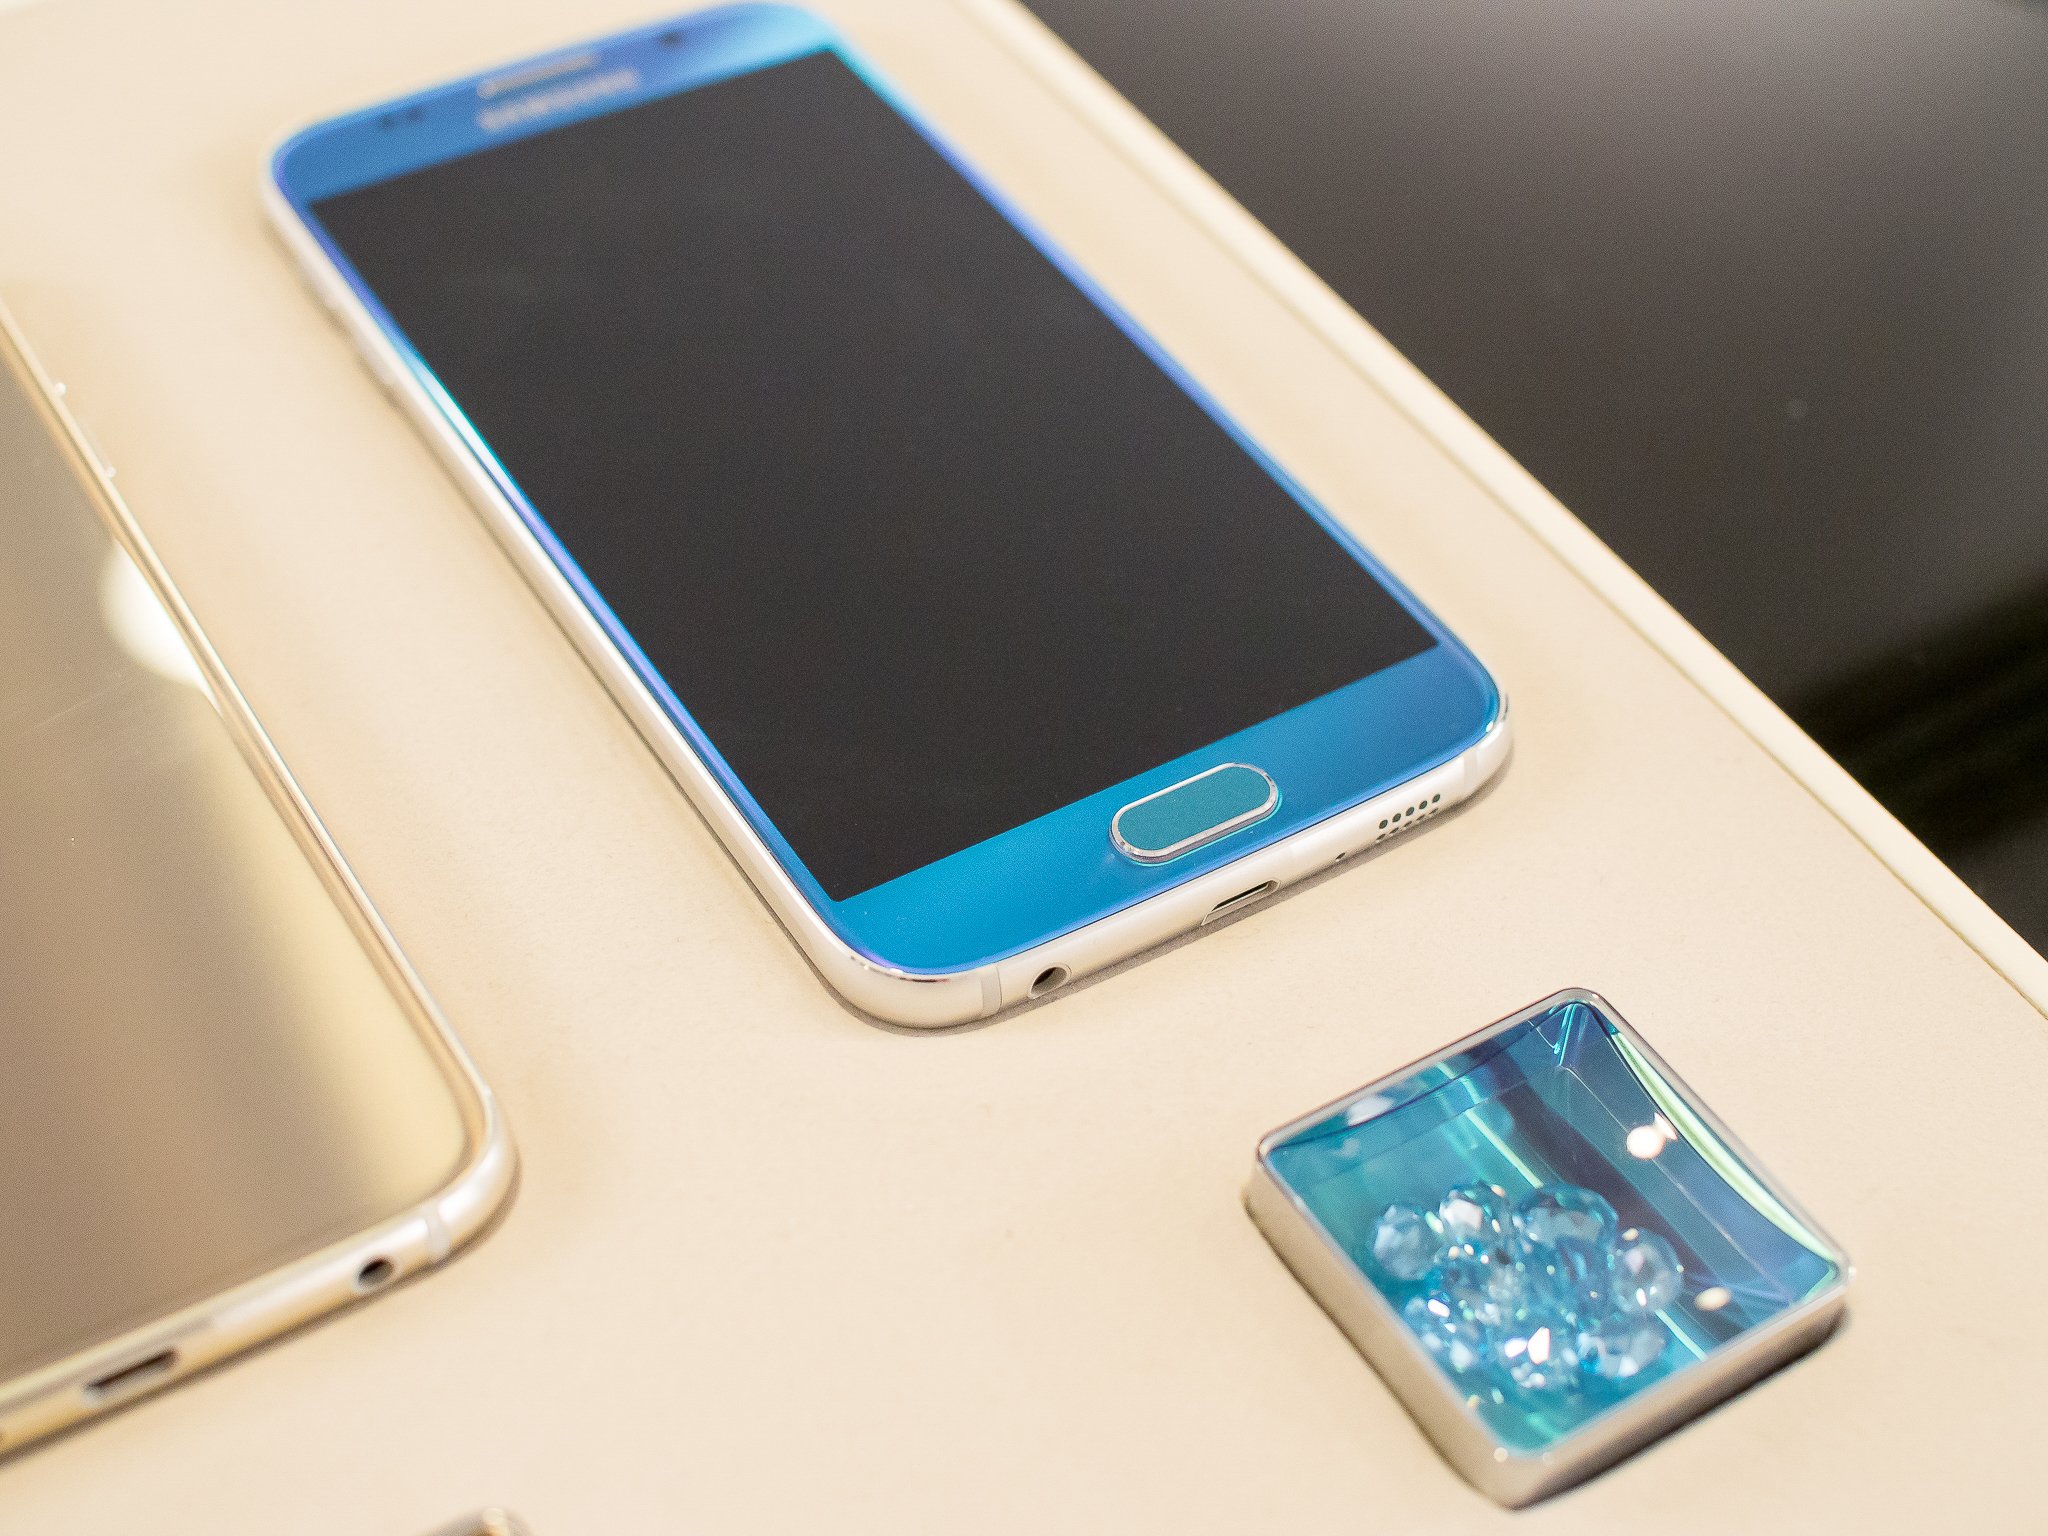 Samsung S6 Bluetooth